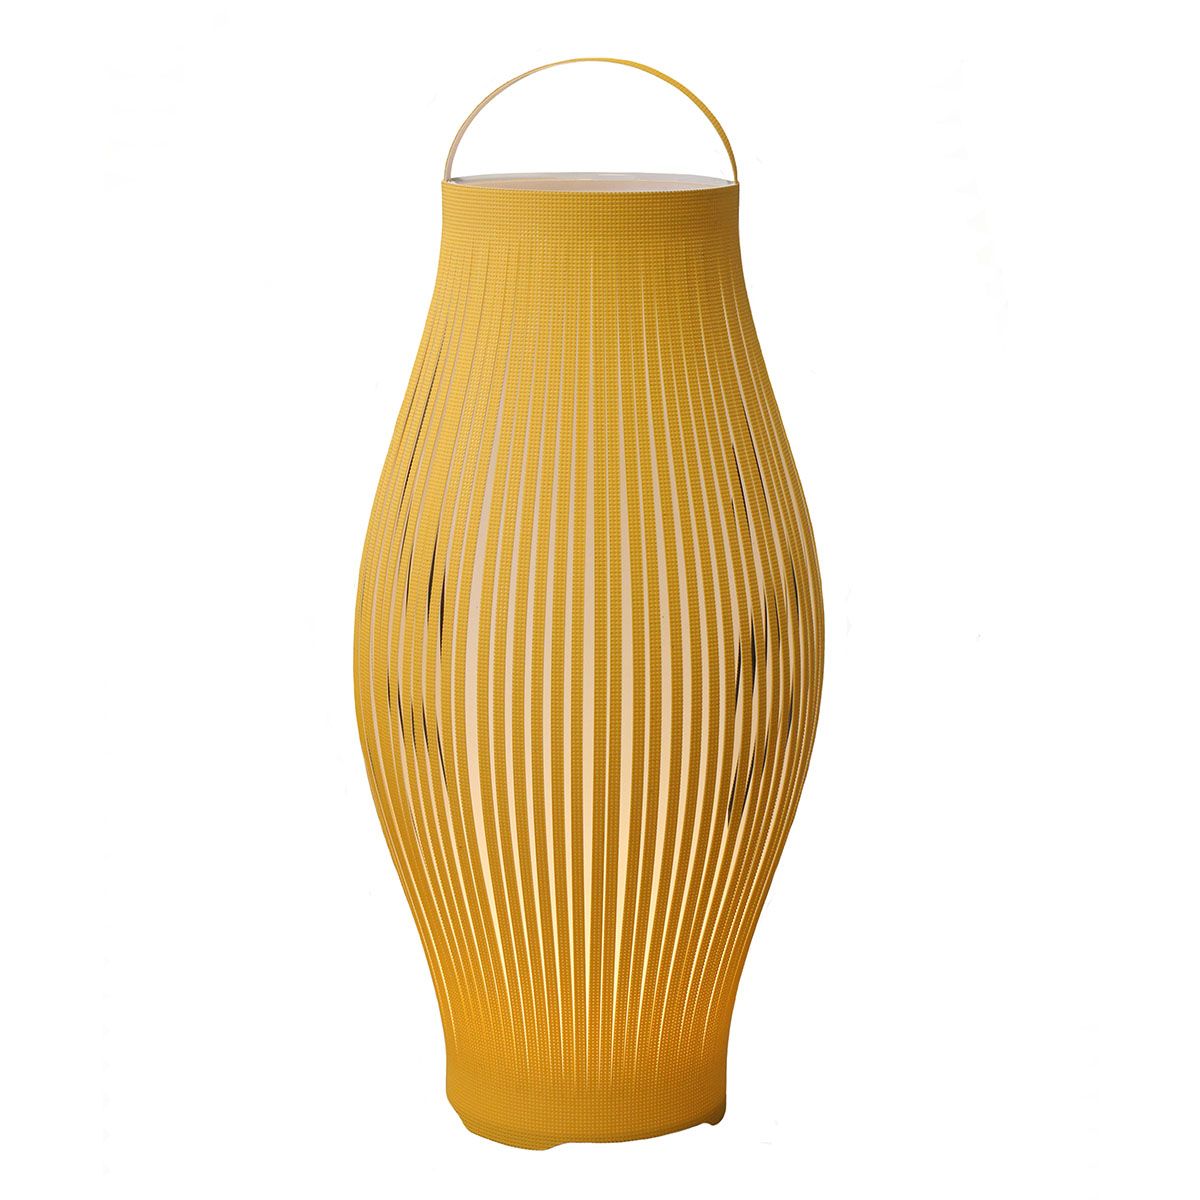 Lampe baladeuse extérieur LED LEEK (H40cm) en polyester jaune